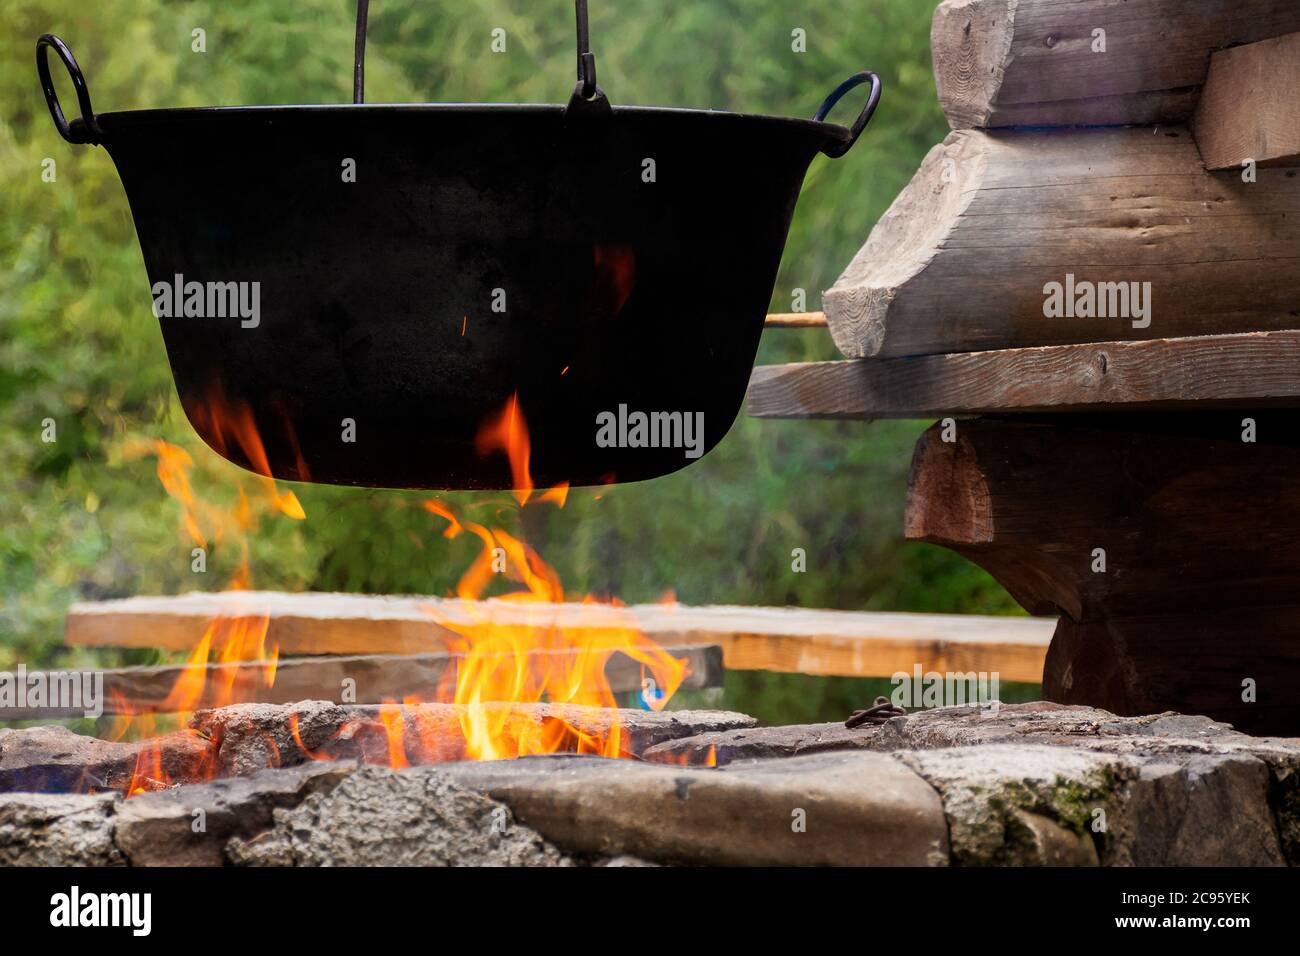 https://c8.alamy.com/comp/2C95YEK/traditional-hungarian-bogracs-goulash-soup-cooking-dish-on-open-fire-in-a-cauldron-preparing-healthy-food-outdoors-concept-popular-european-cuisine-2C95YEK.jpg